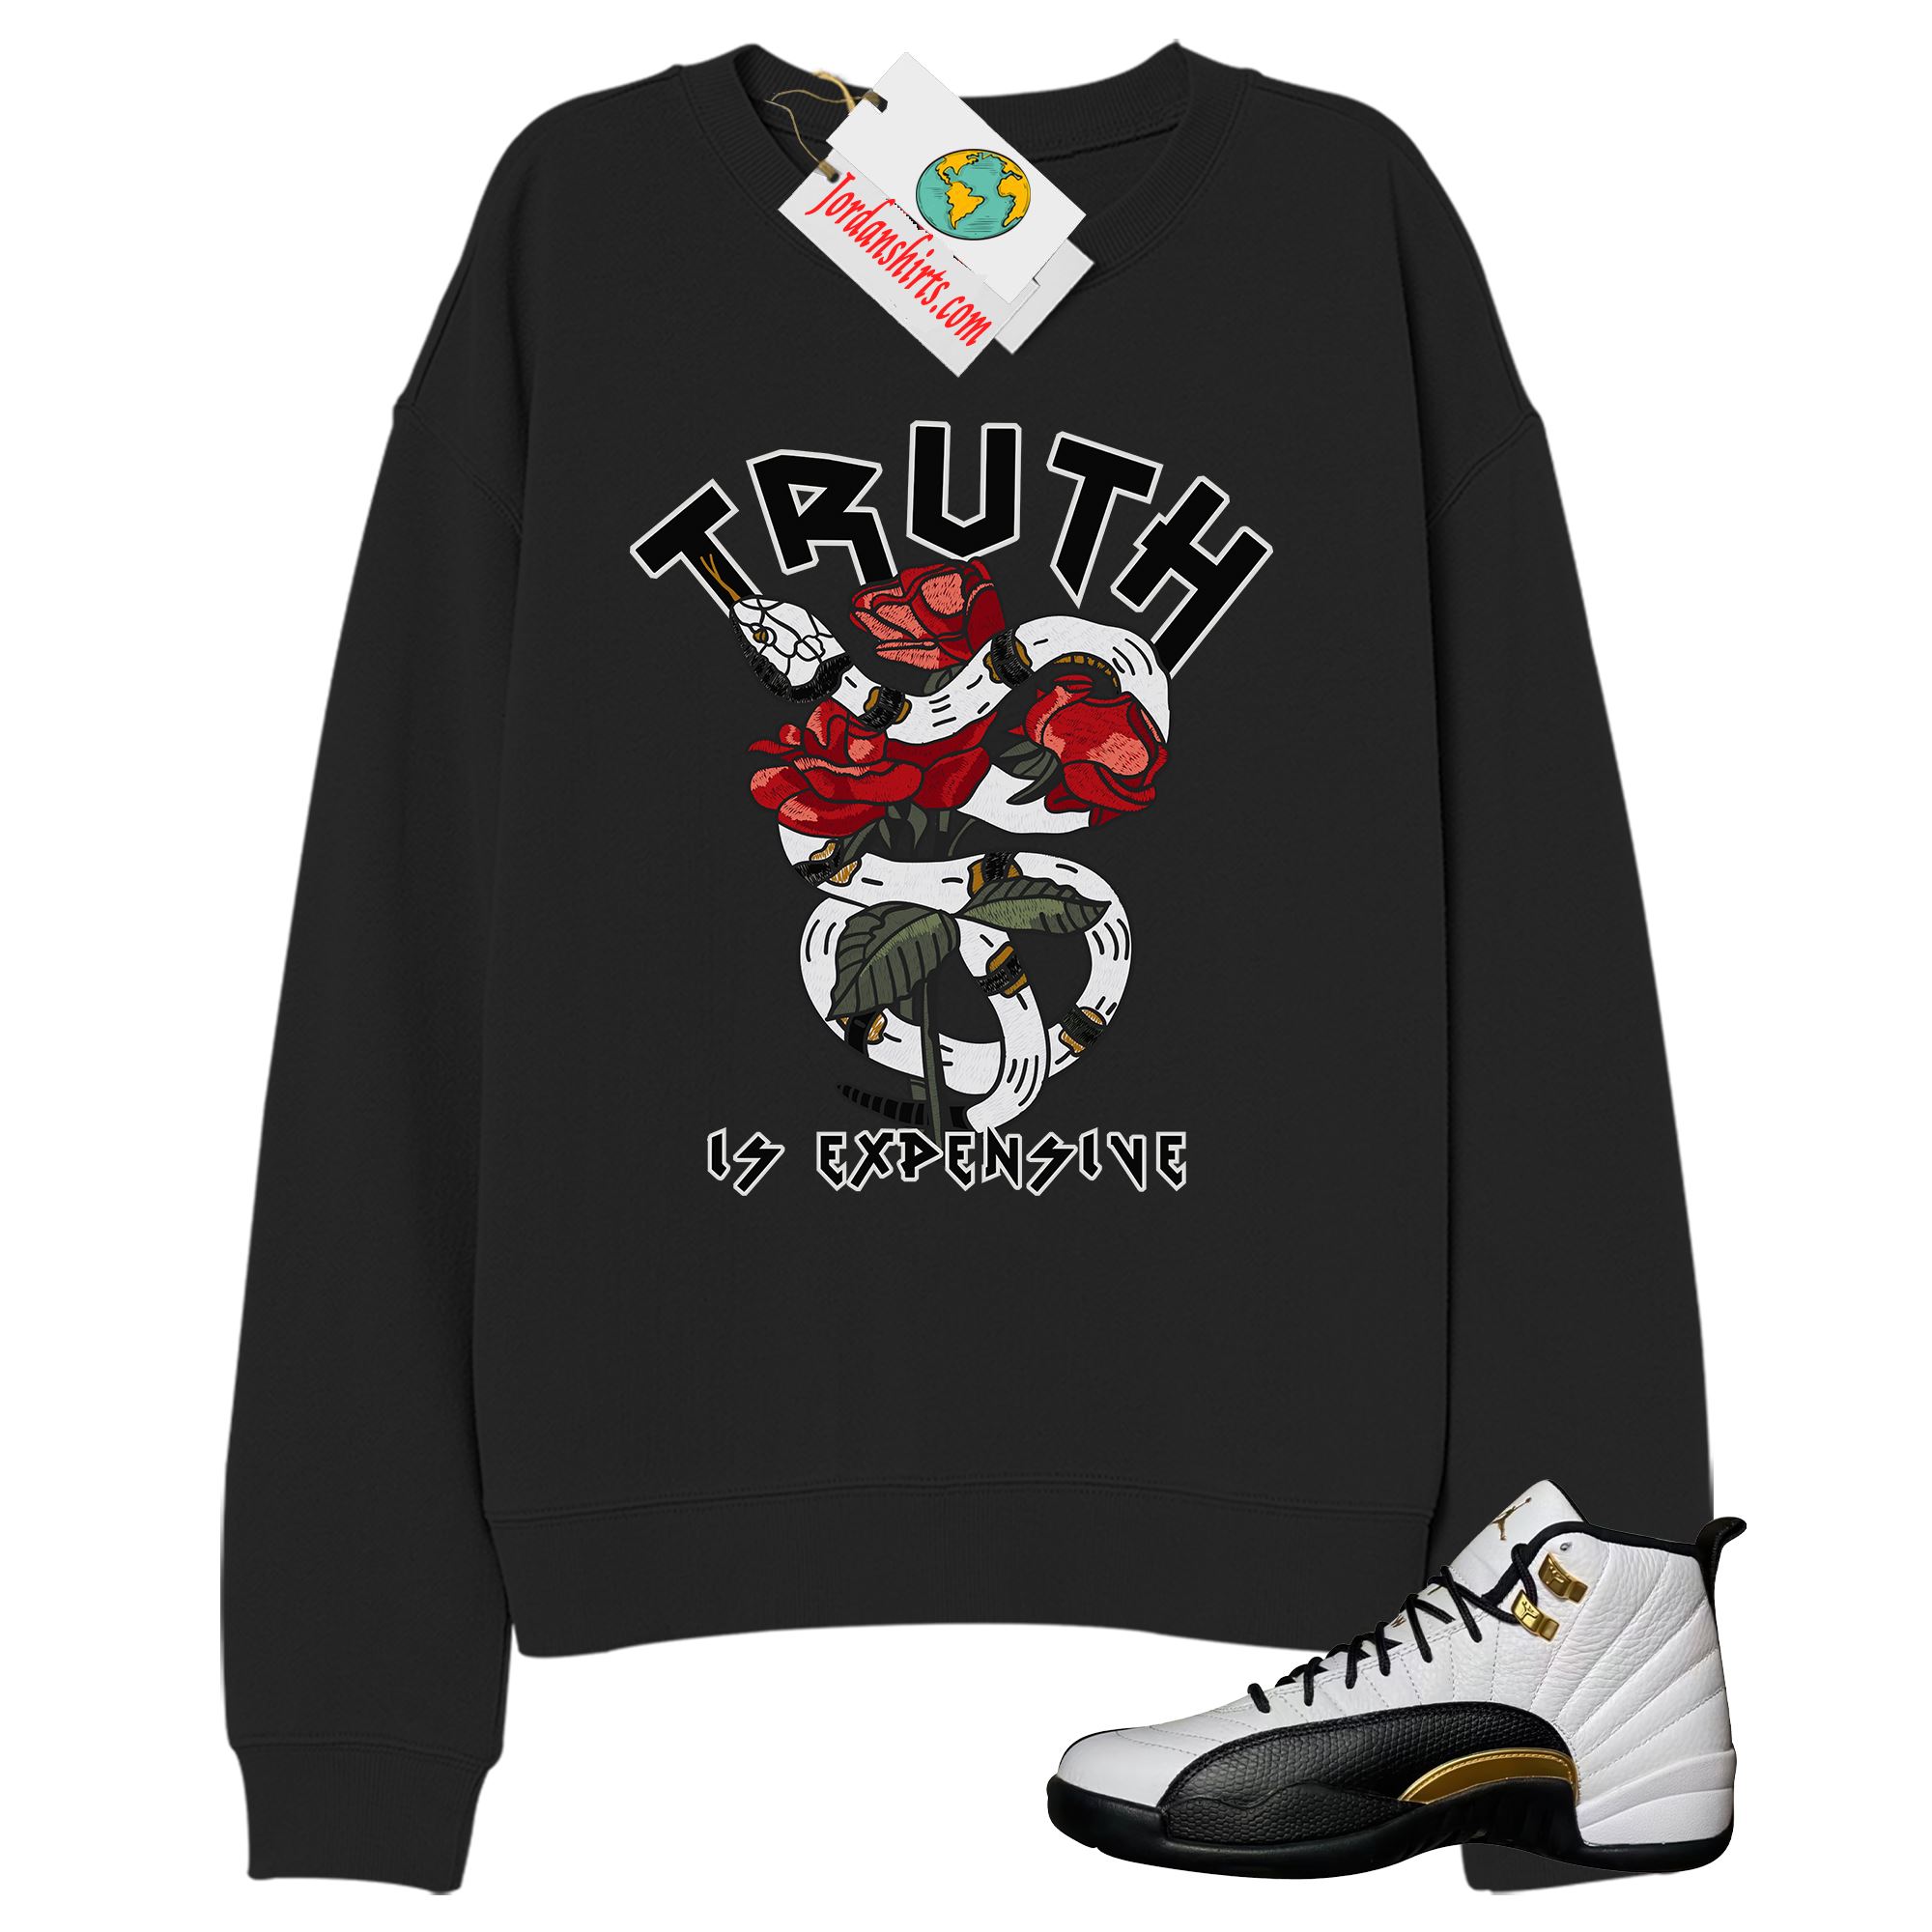 Jordan 12 Sweatshirt, Truth Is Expensive Snake Black Sweatshirt Air Jordan 12 Royalty 12s Size Up To 5xl